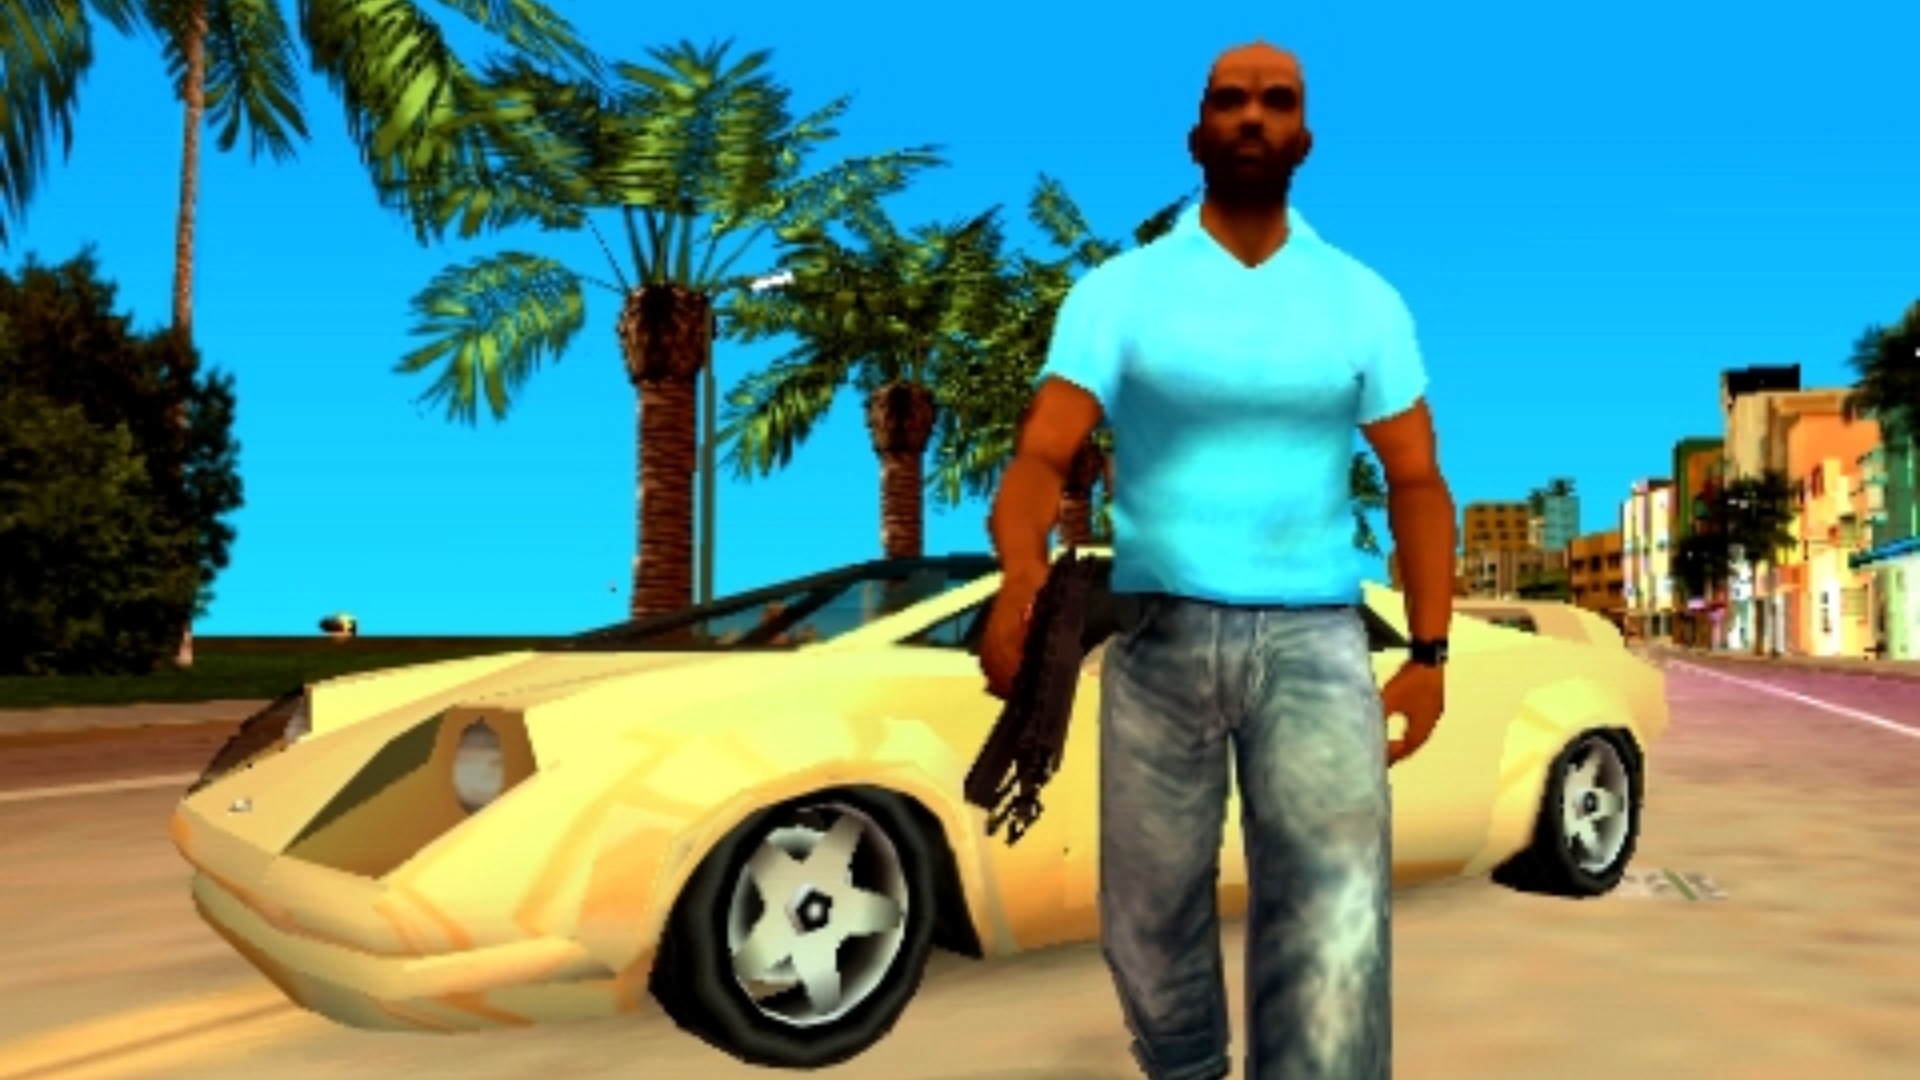 Grand Theft Auto: Liberty City Stories / Vice City Stories - Metacritic